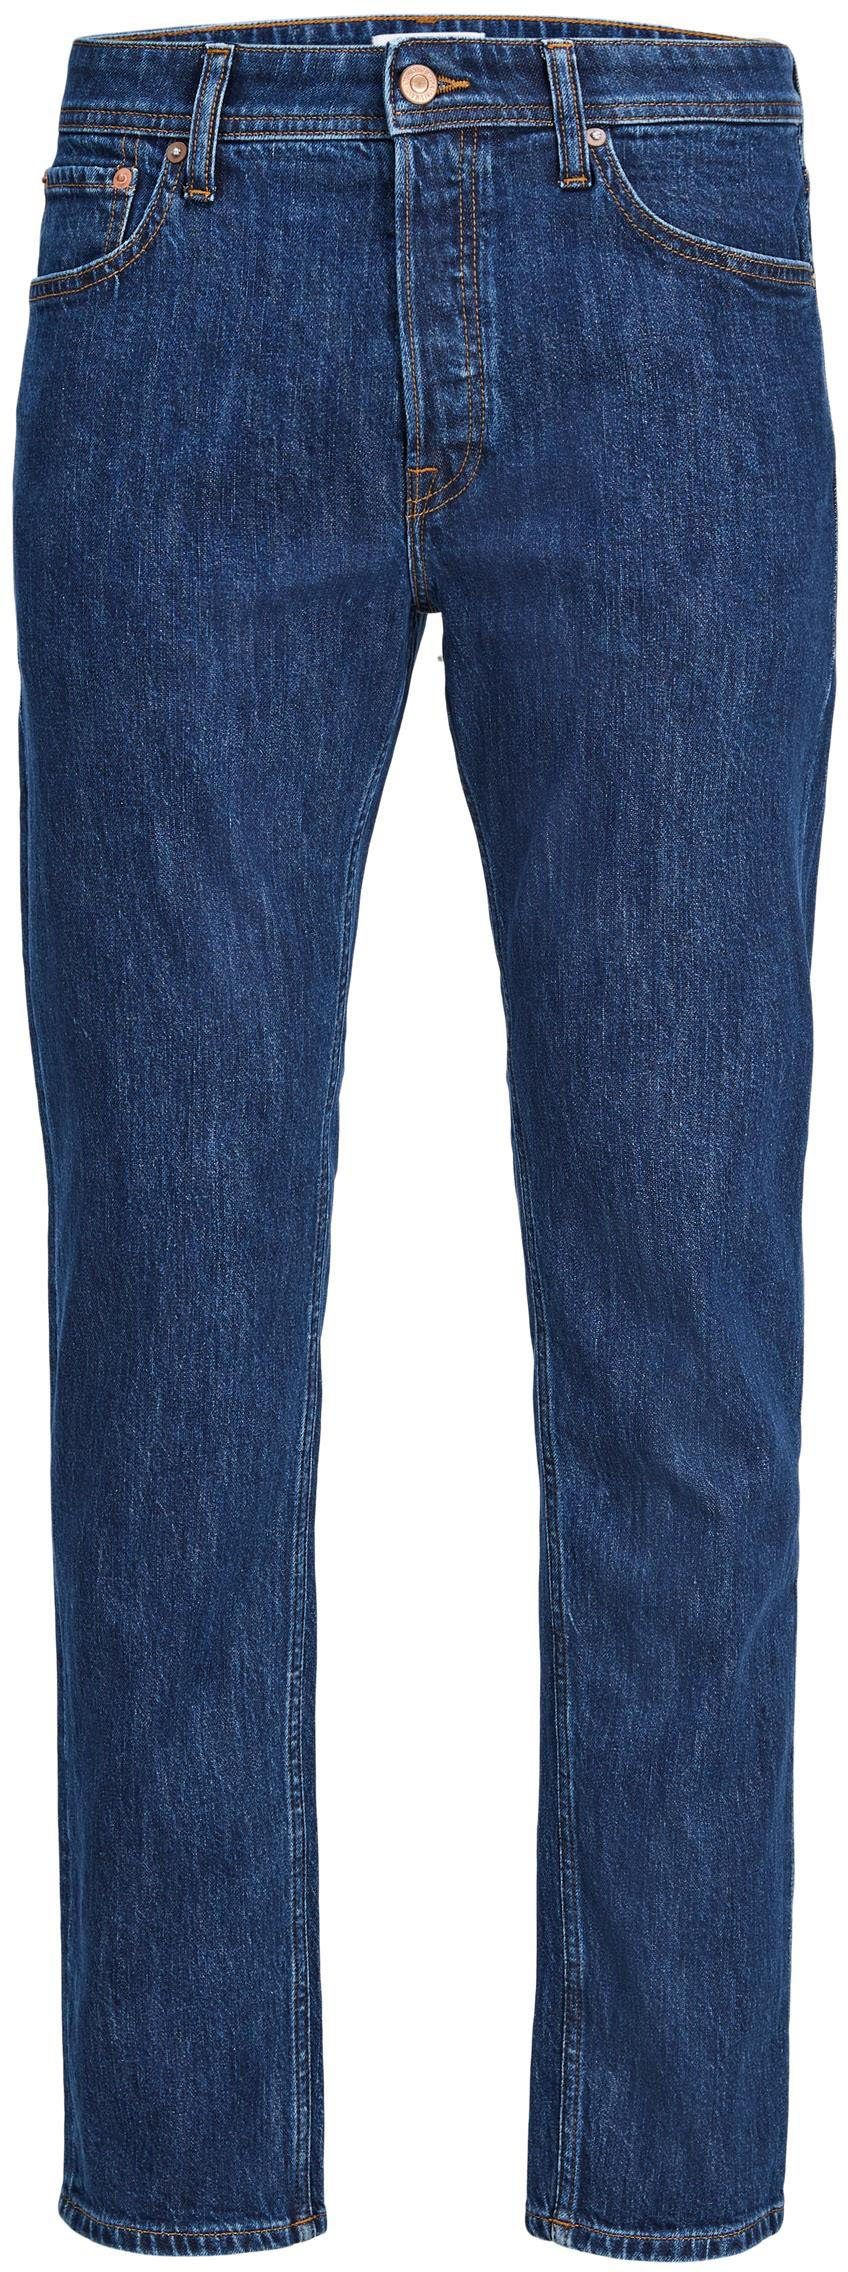 223 Jack Jones JJORIGINAL JJIMIKE Comfort-fit-Jeans denim Blue MF &